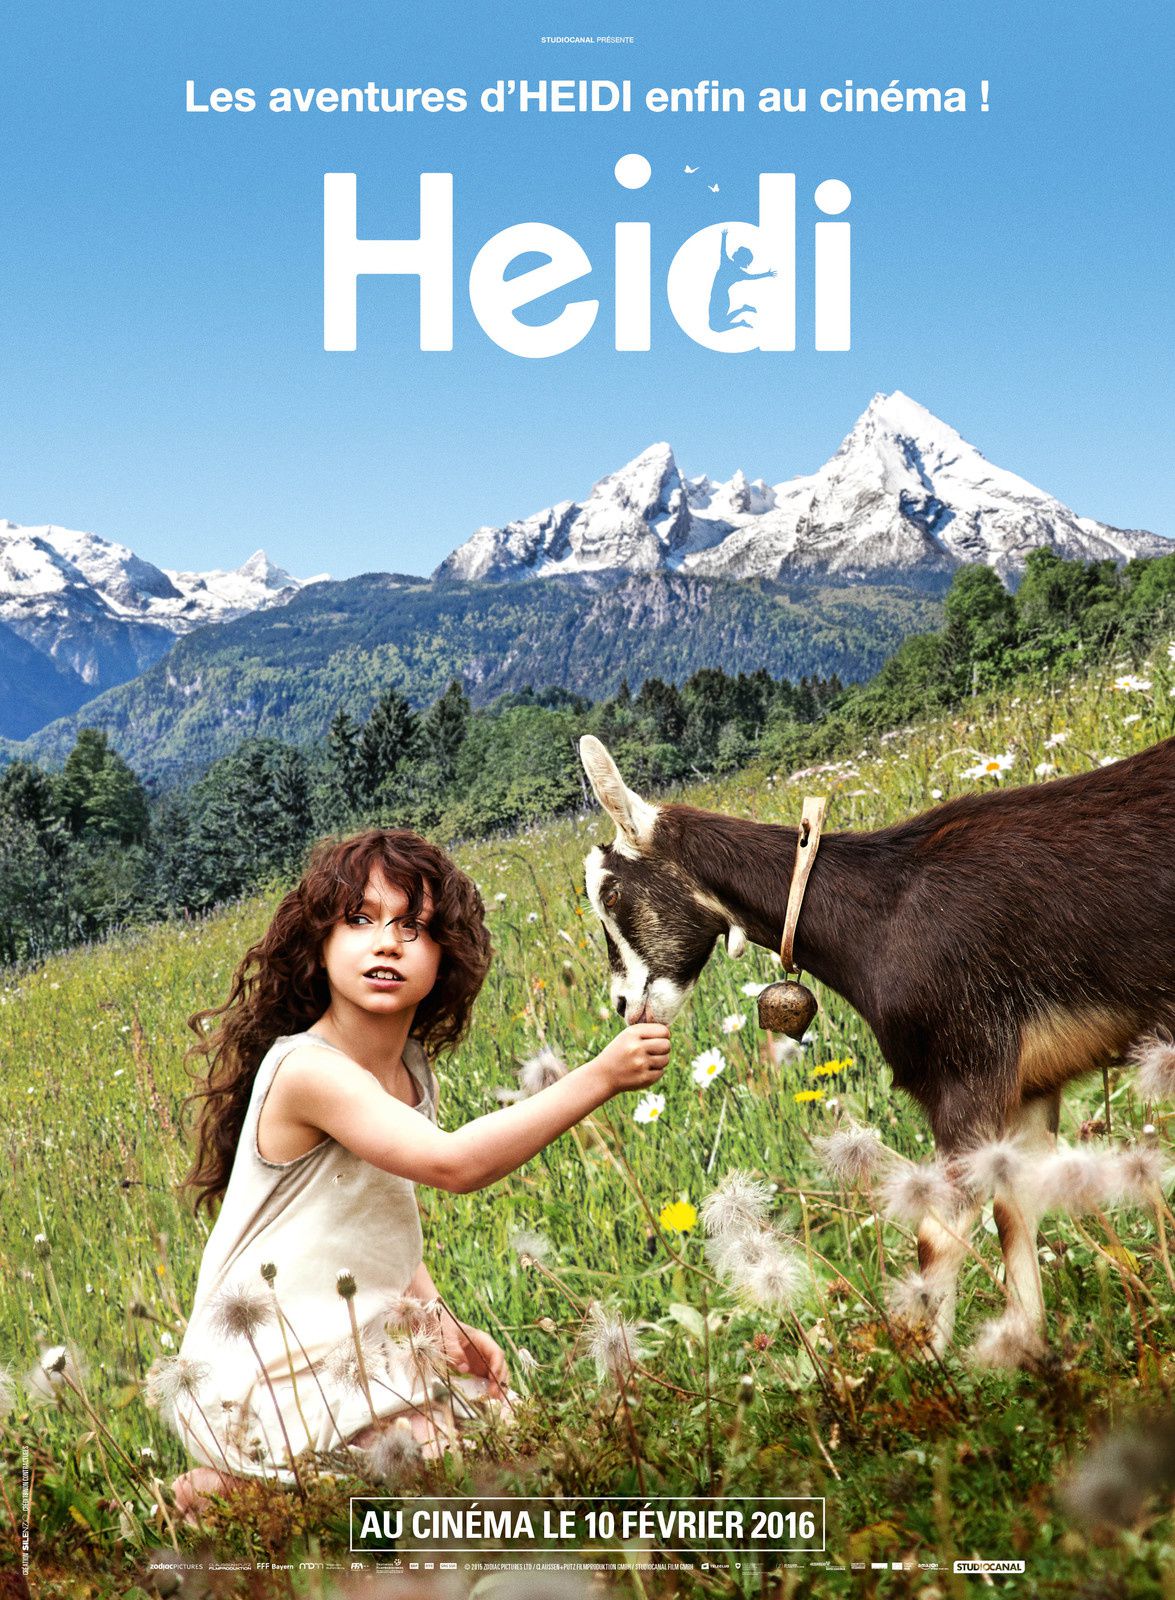 Barbara Pravi - On m'appelle Heidi - Chanson du film HEIDI - Au cinéma le 10 février 2016